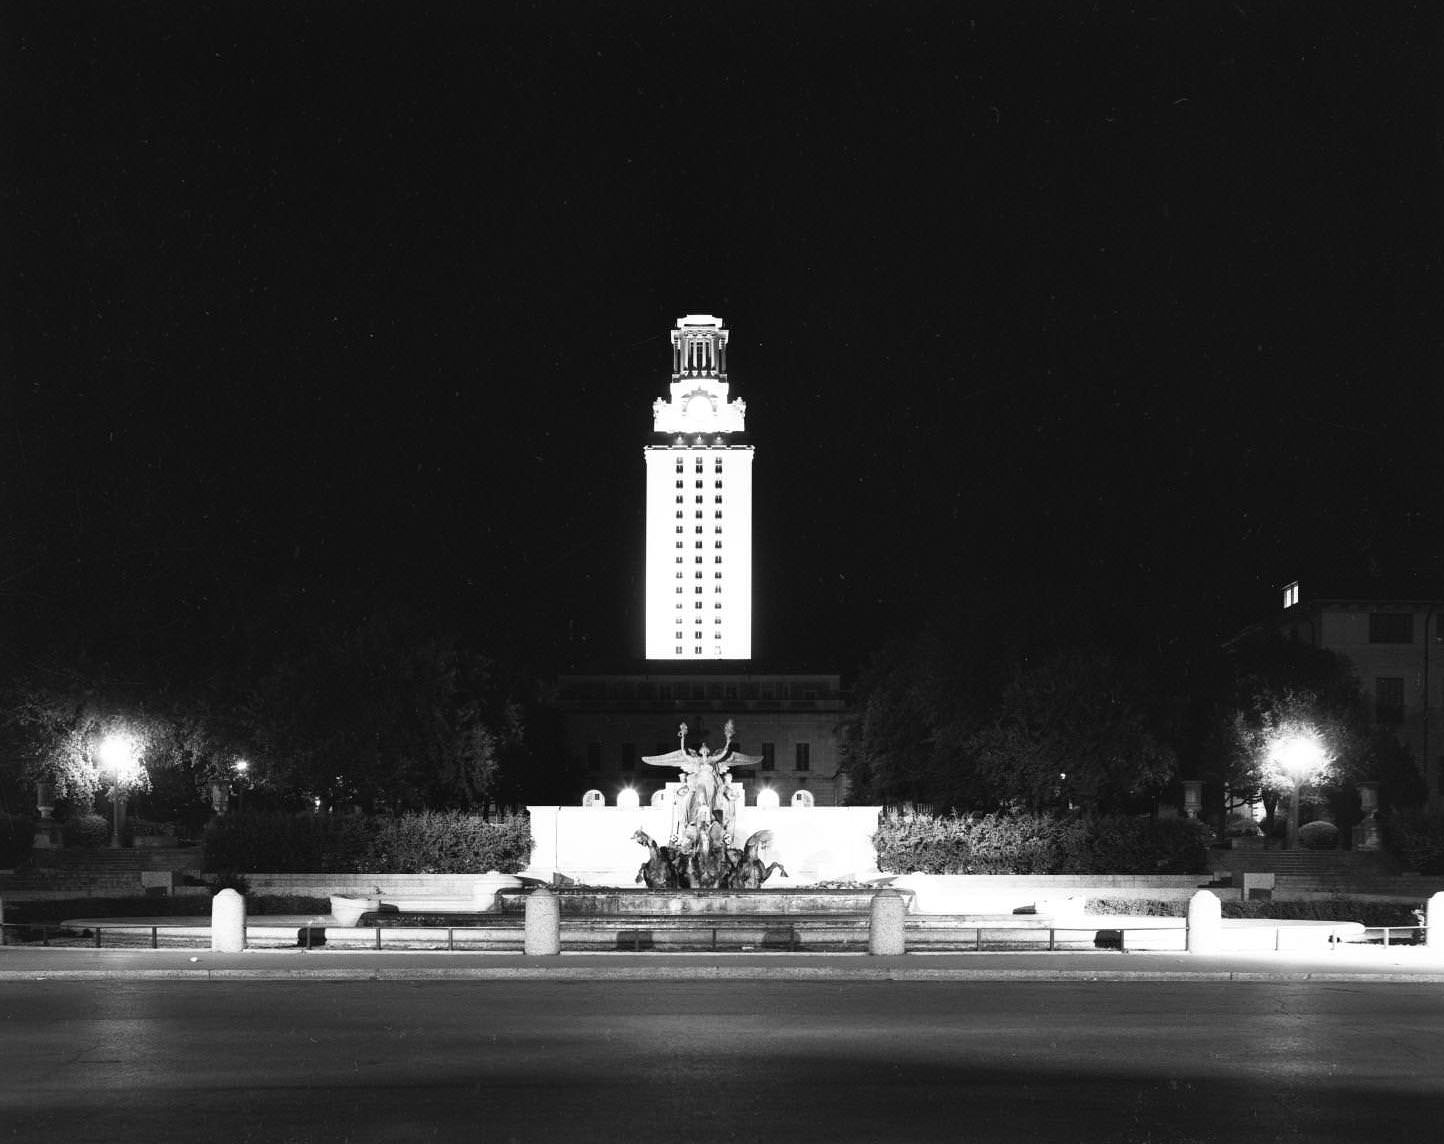 Stark shot of the UT Tower lit up at night on 21st street, 1957